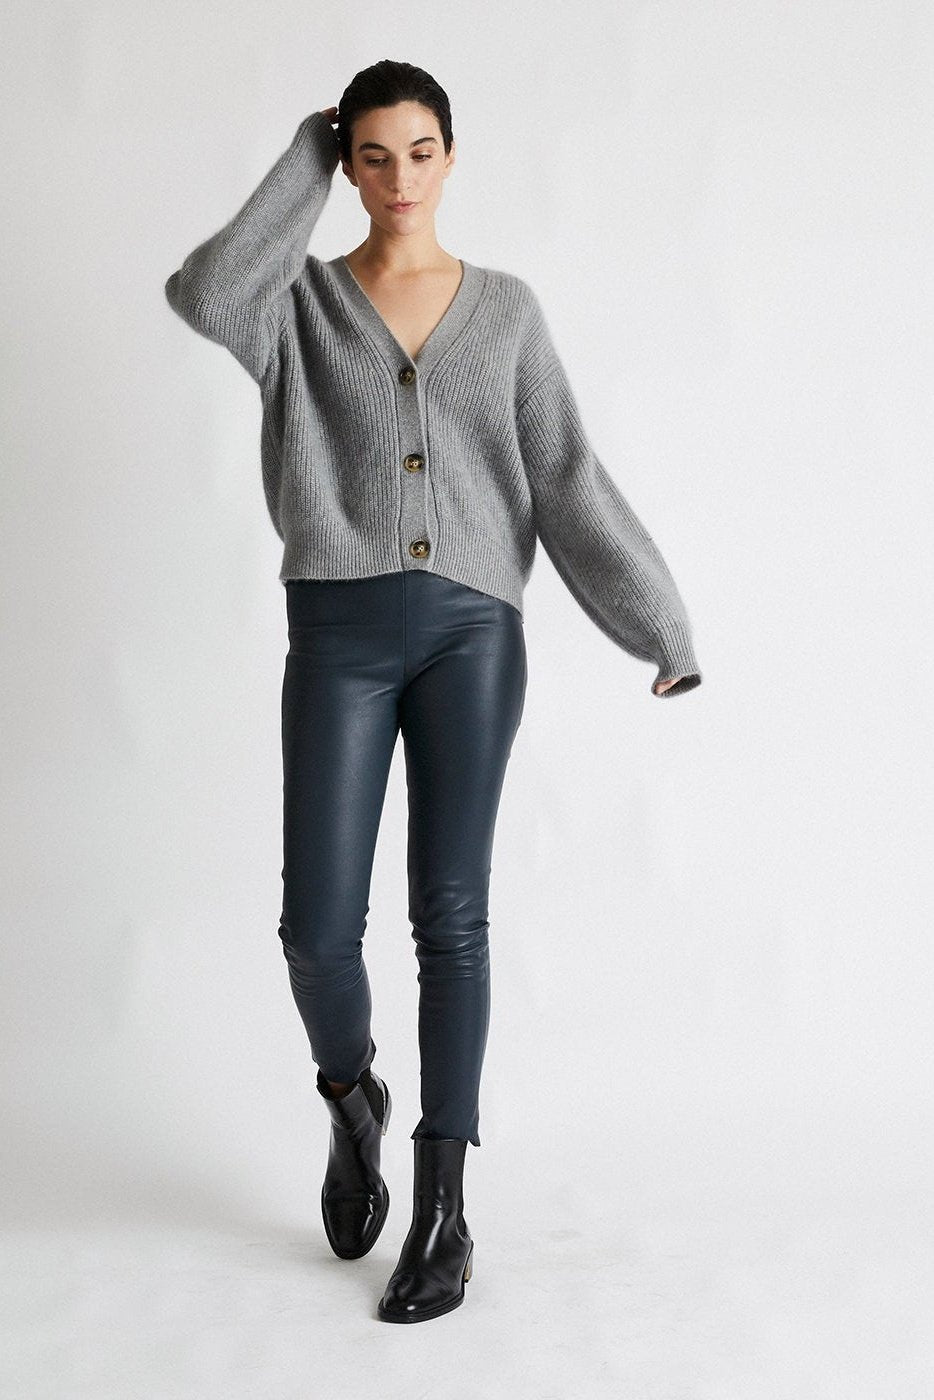 +Beryll Cashmere Cardigan Sweater | Pebble Gray - +Beryll Cashmere Cardigan Sweater | Pebble Gray - +Beryll Worn By Good People